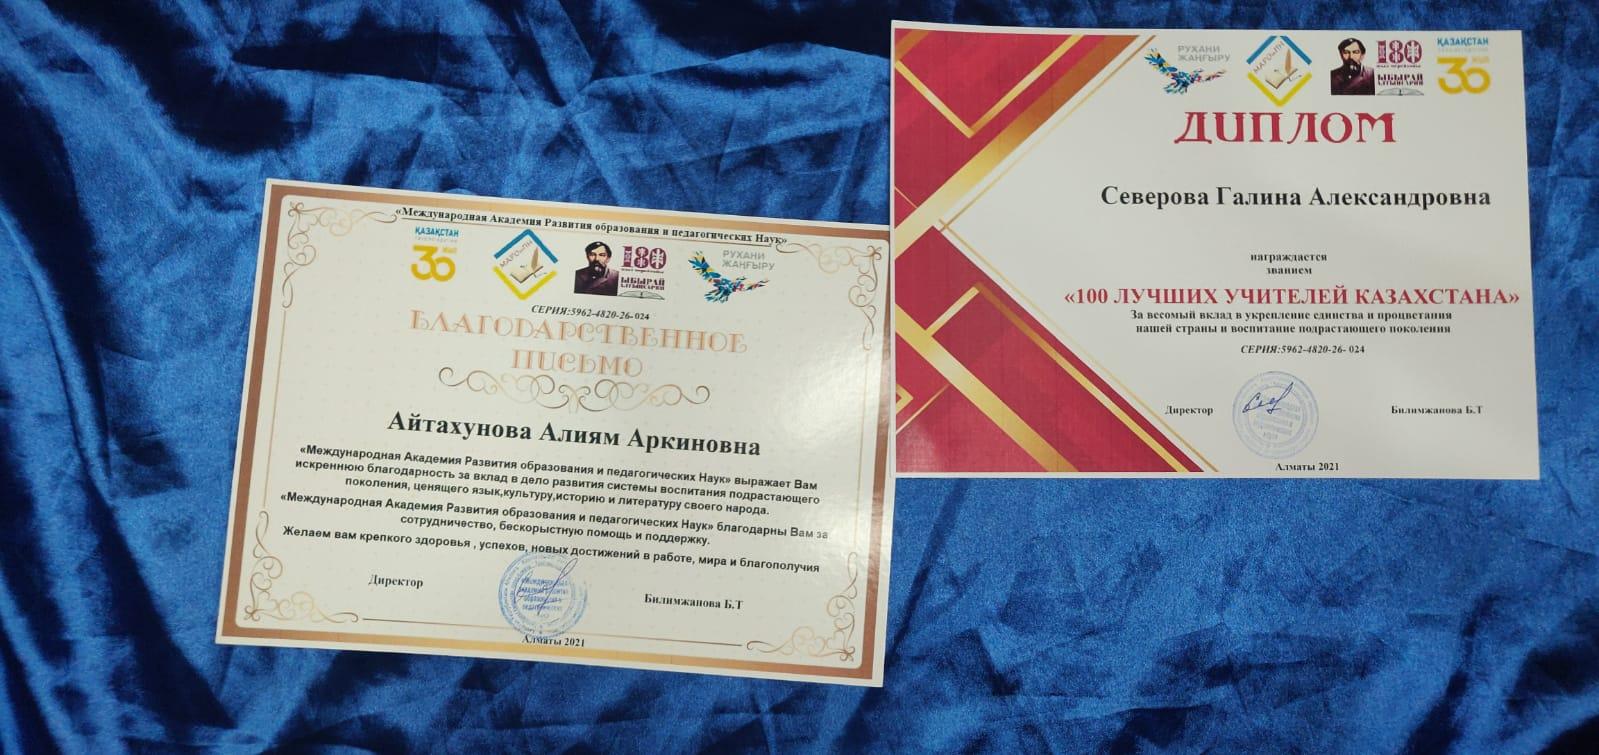 Қазақстанның үздік 100 мұғалімі! 100 лучших учителей Казахстана!